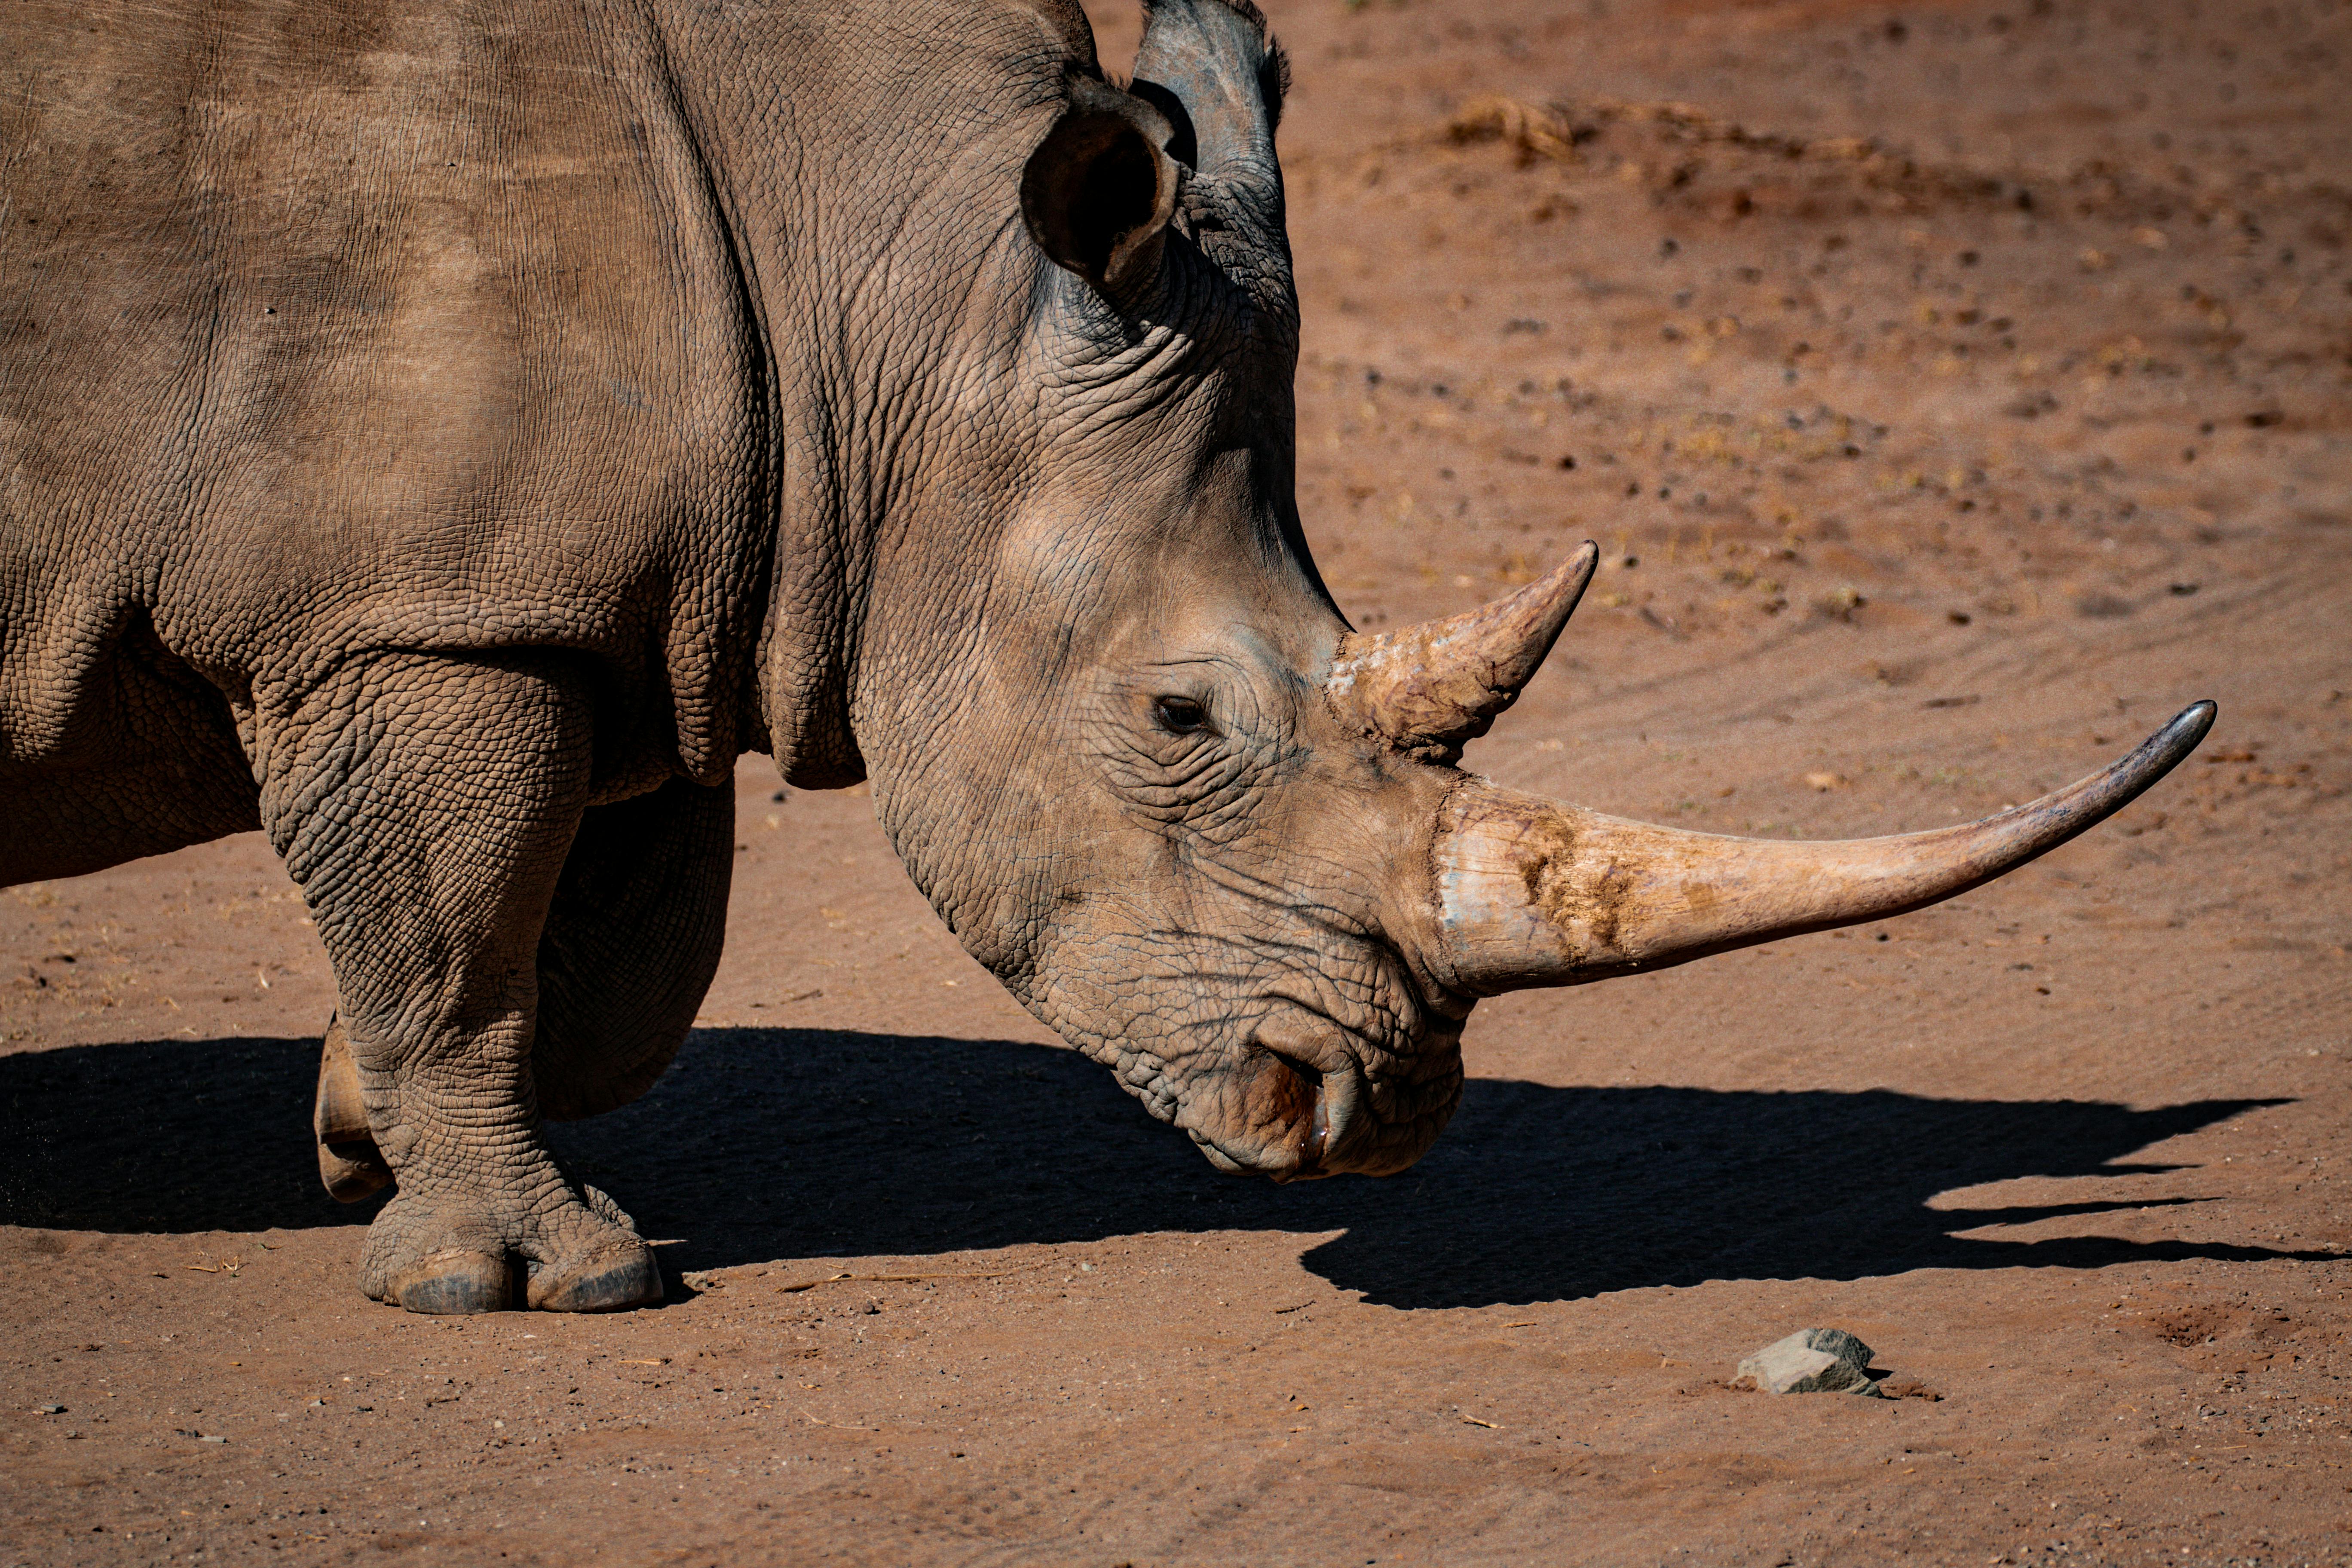 rhinoceros student download